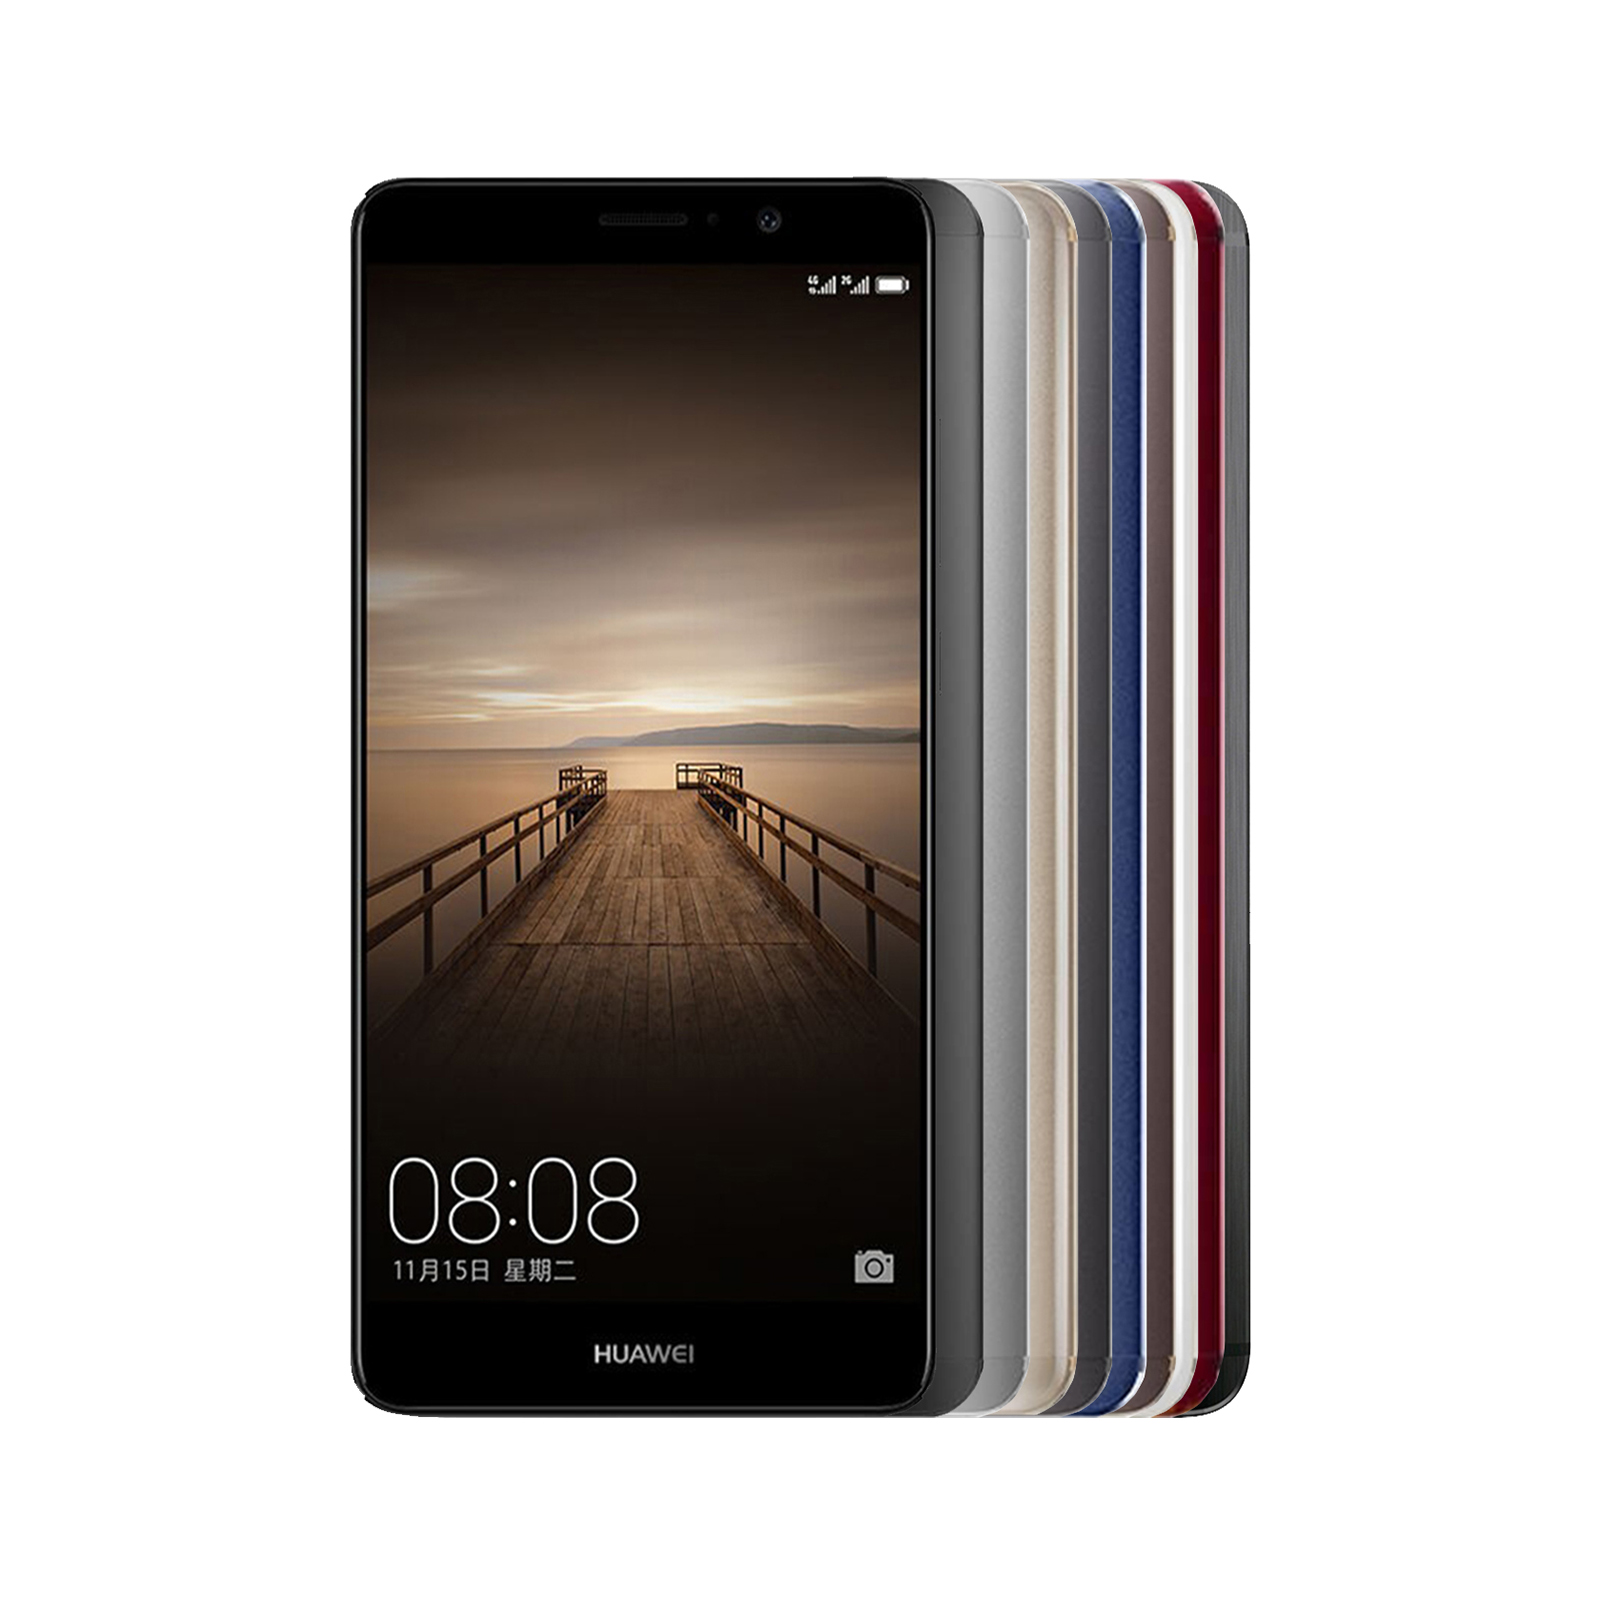 Huawei Mate 9 - Brand New